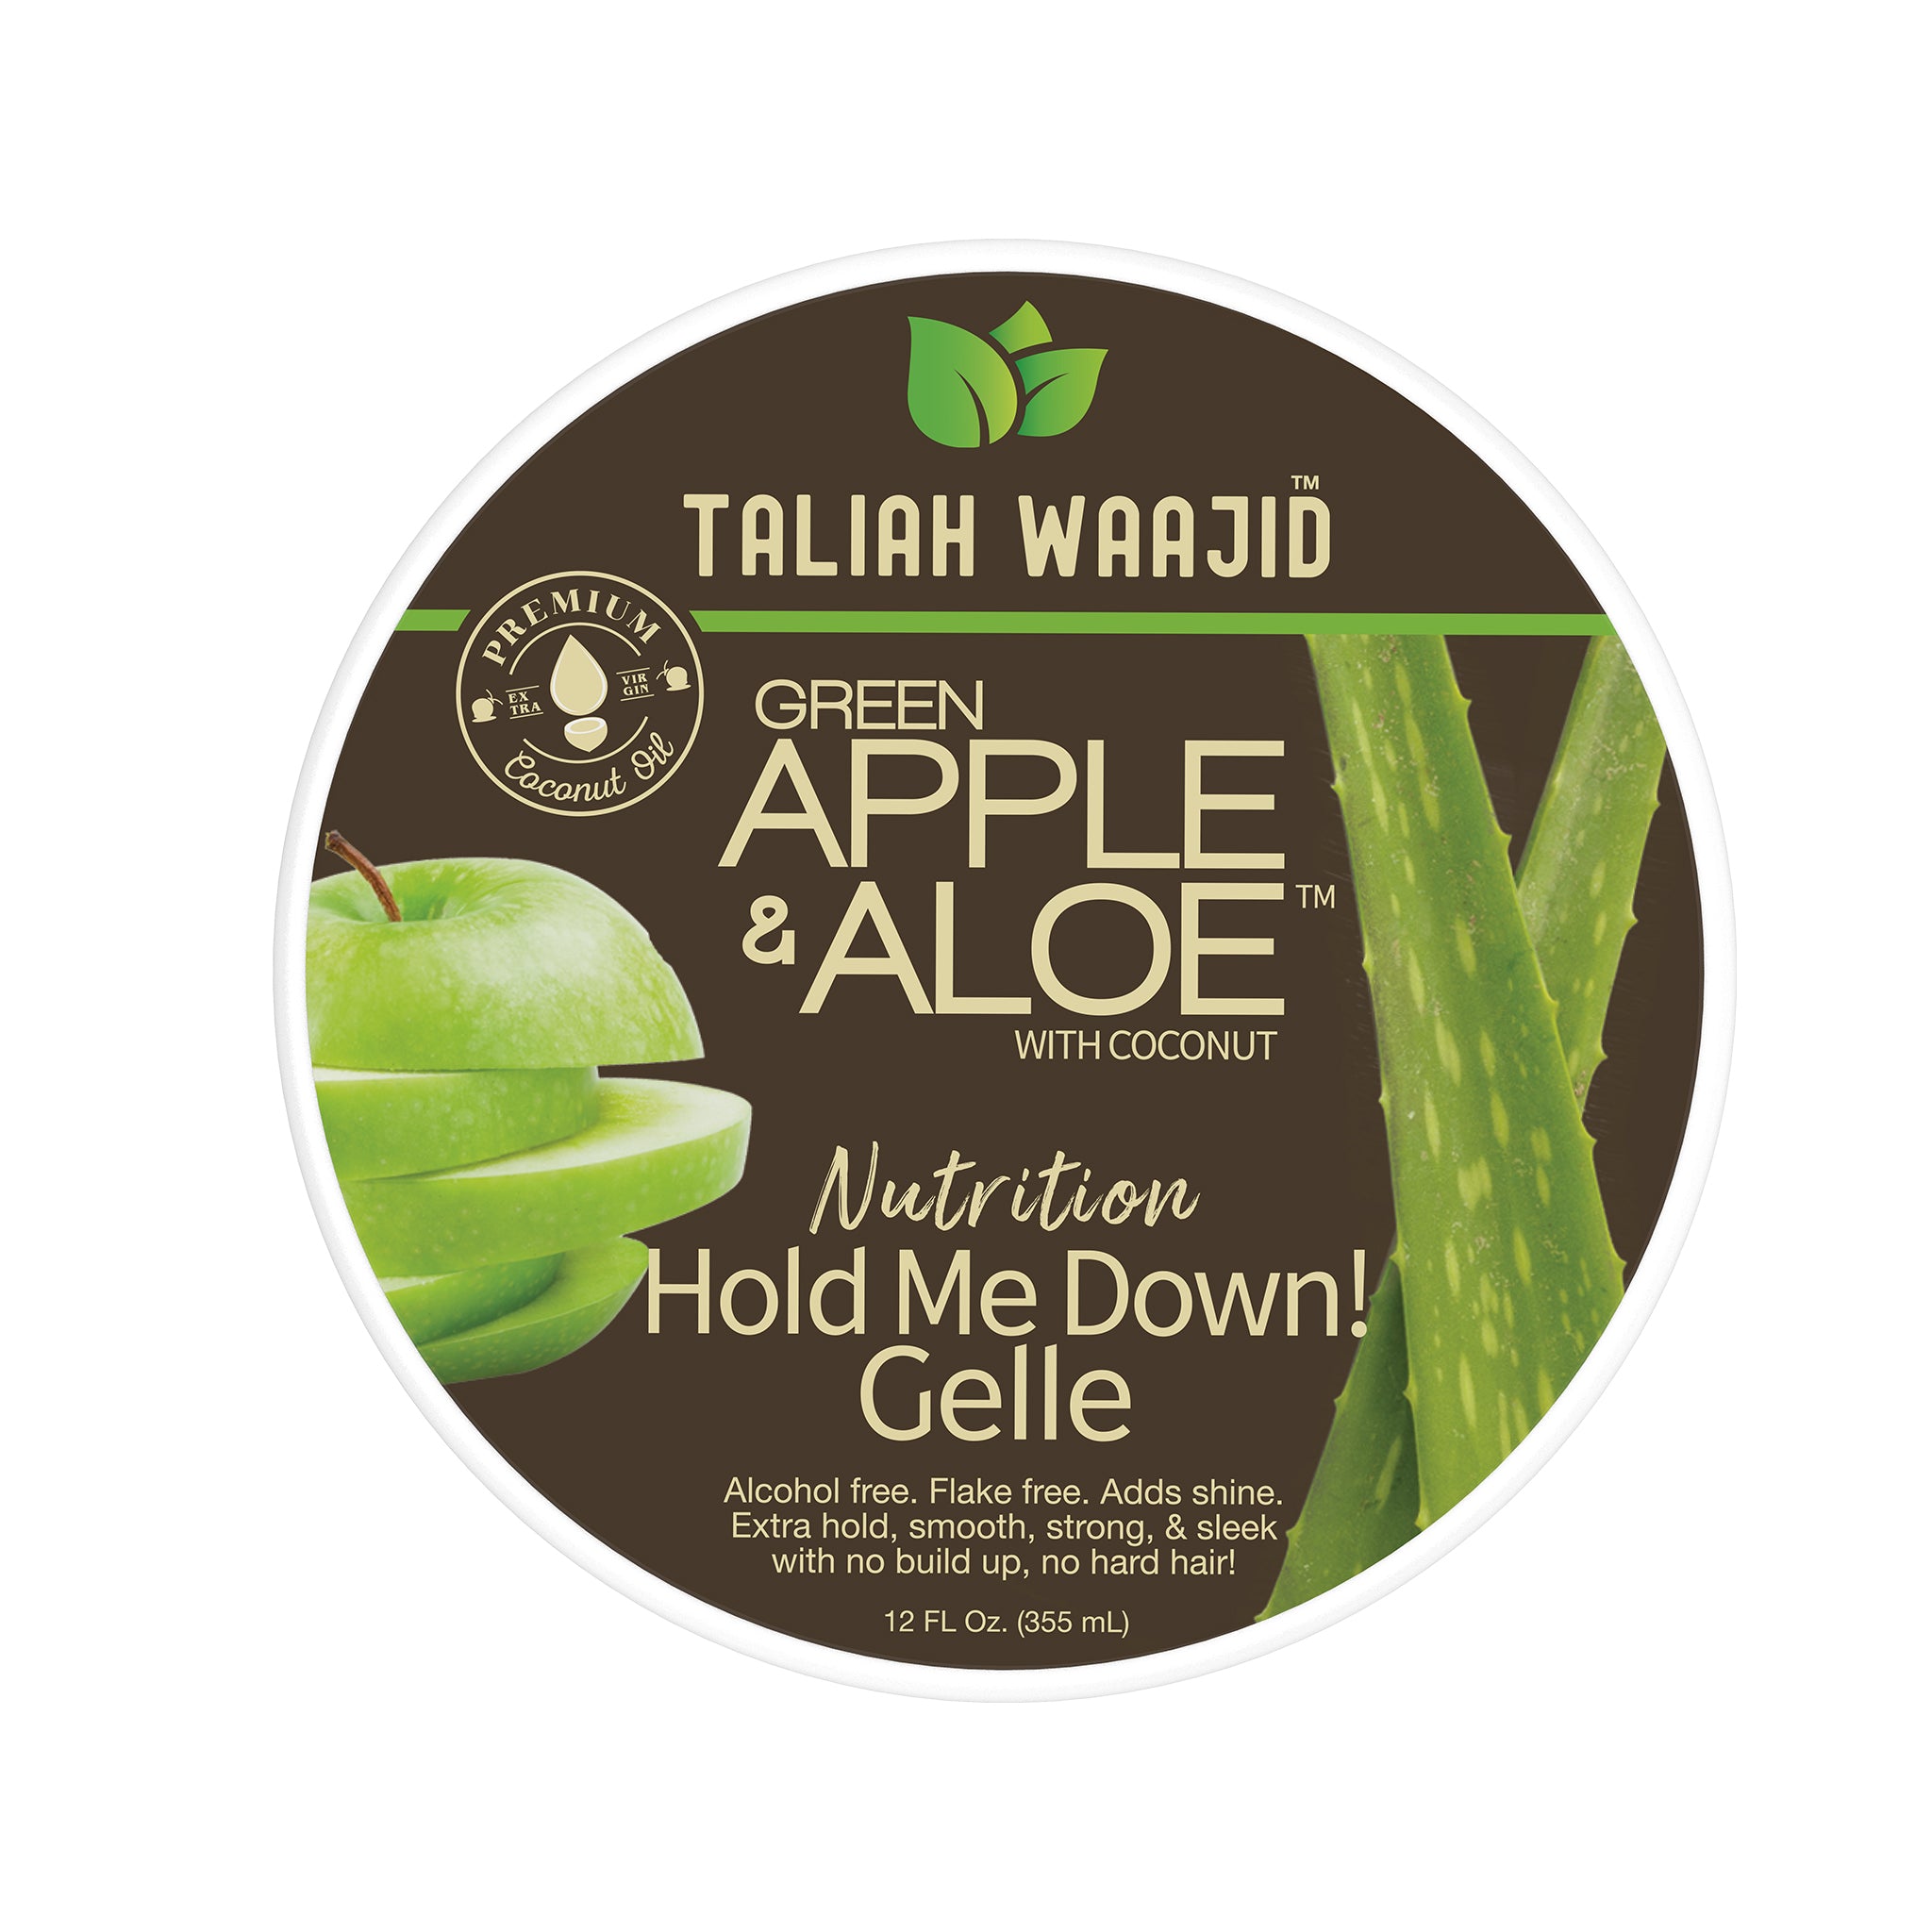 Taliah Waajid Green Apple & Aloe Nutrition Hold Me Down! Gelle 12oz